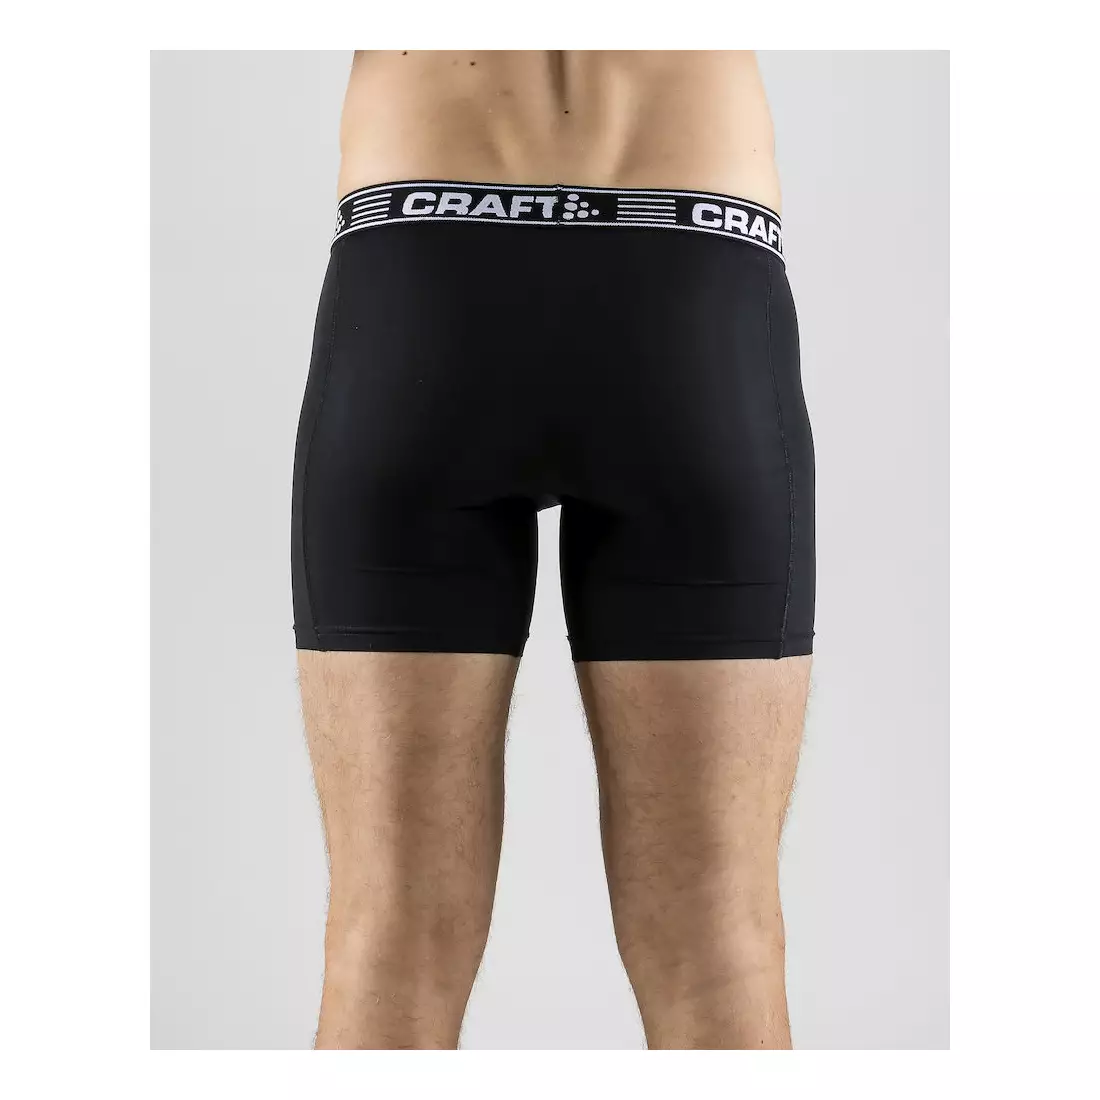 CRAFT 6-INCH men's sports boxer shorts, black 1905489-9900